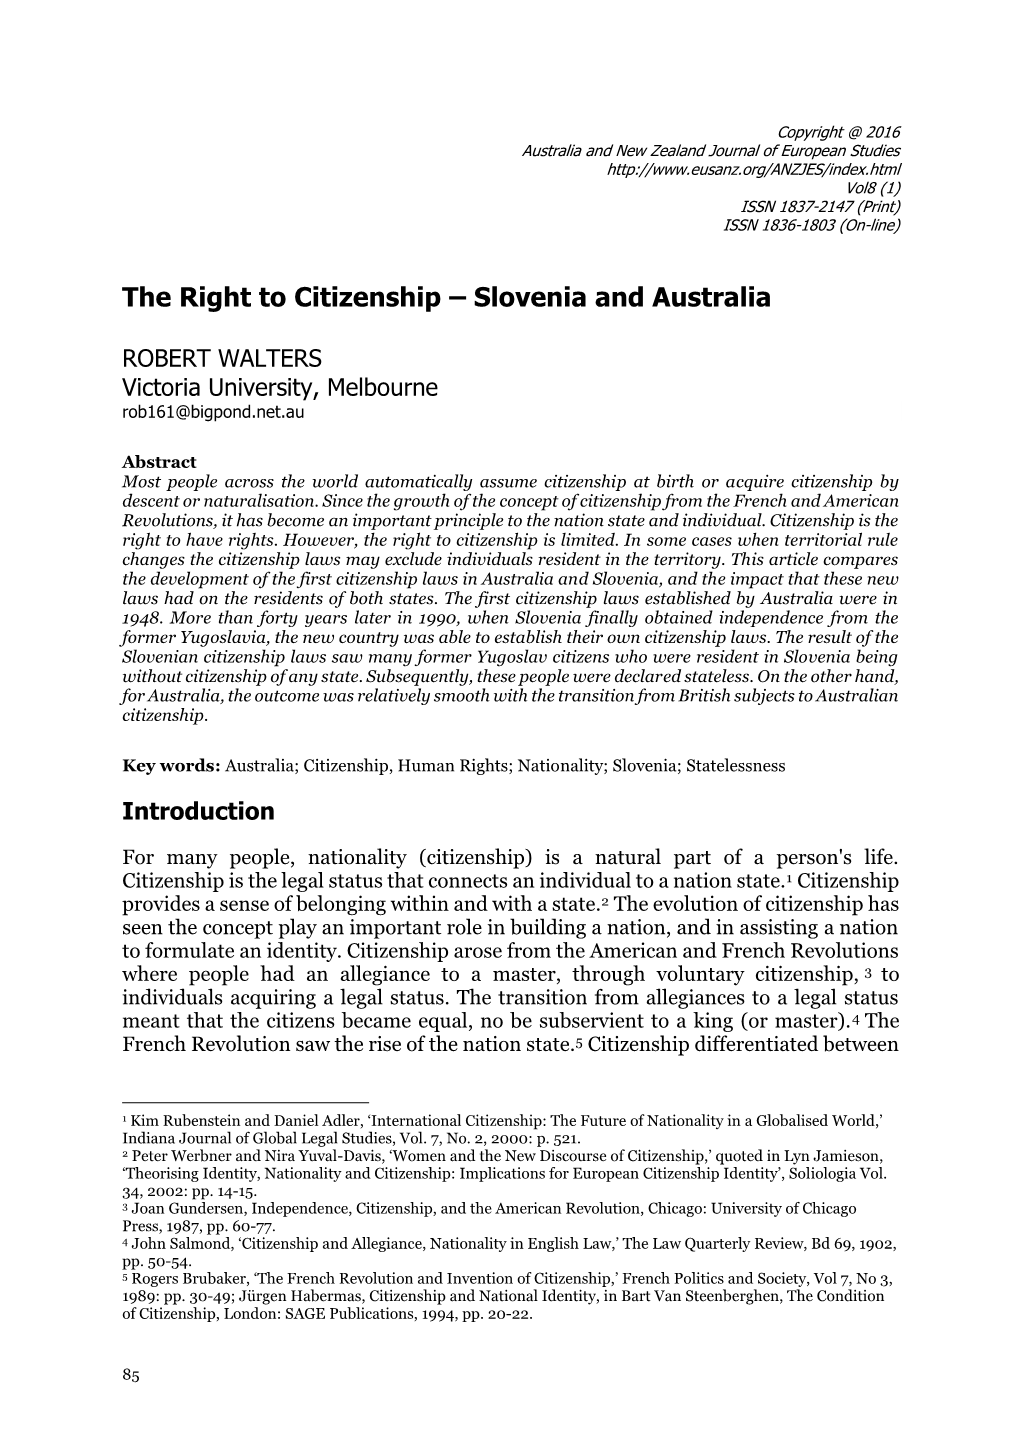 The Right to Citizenship – Slovenia and Australia